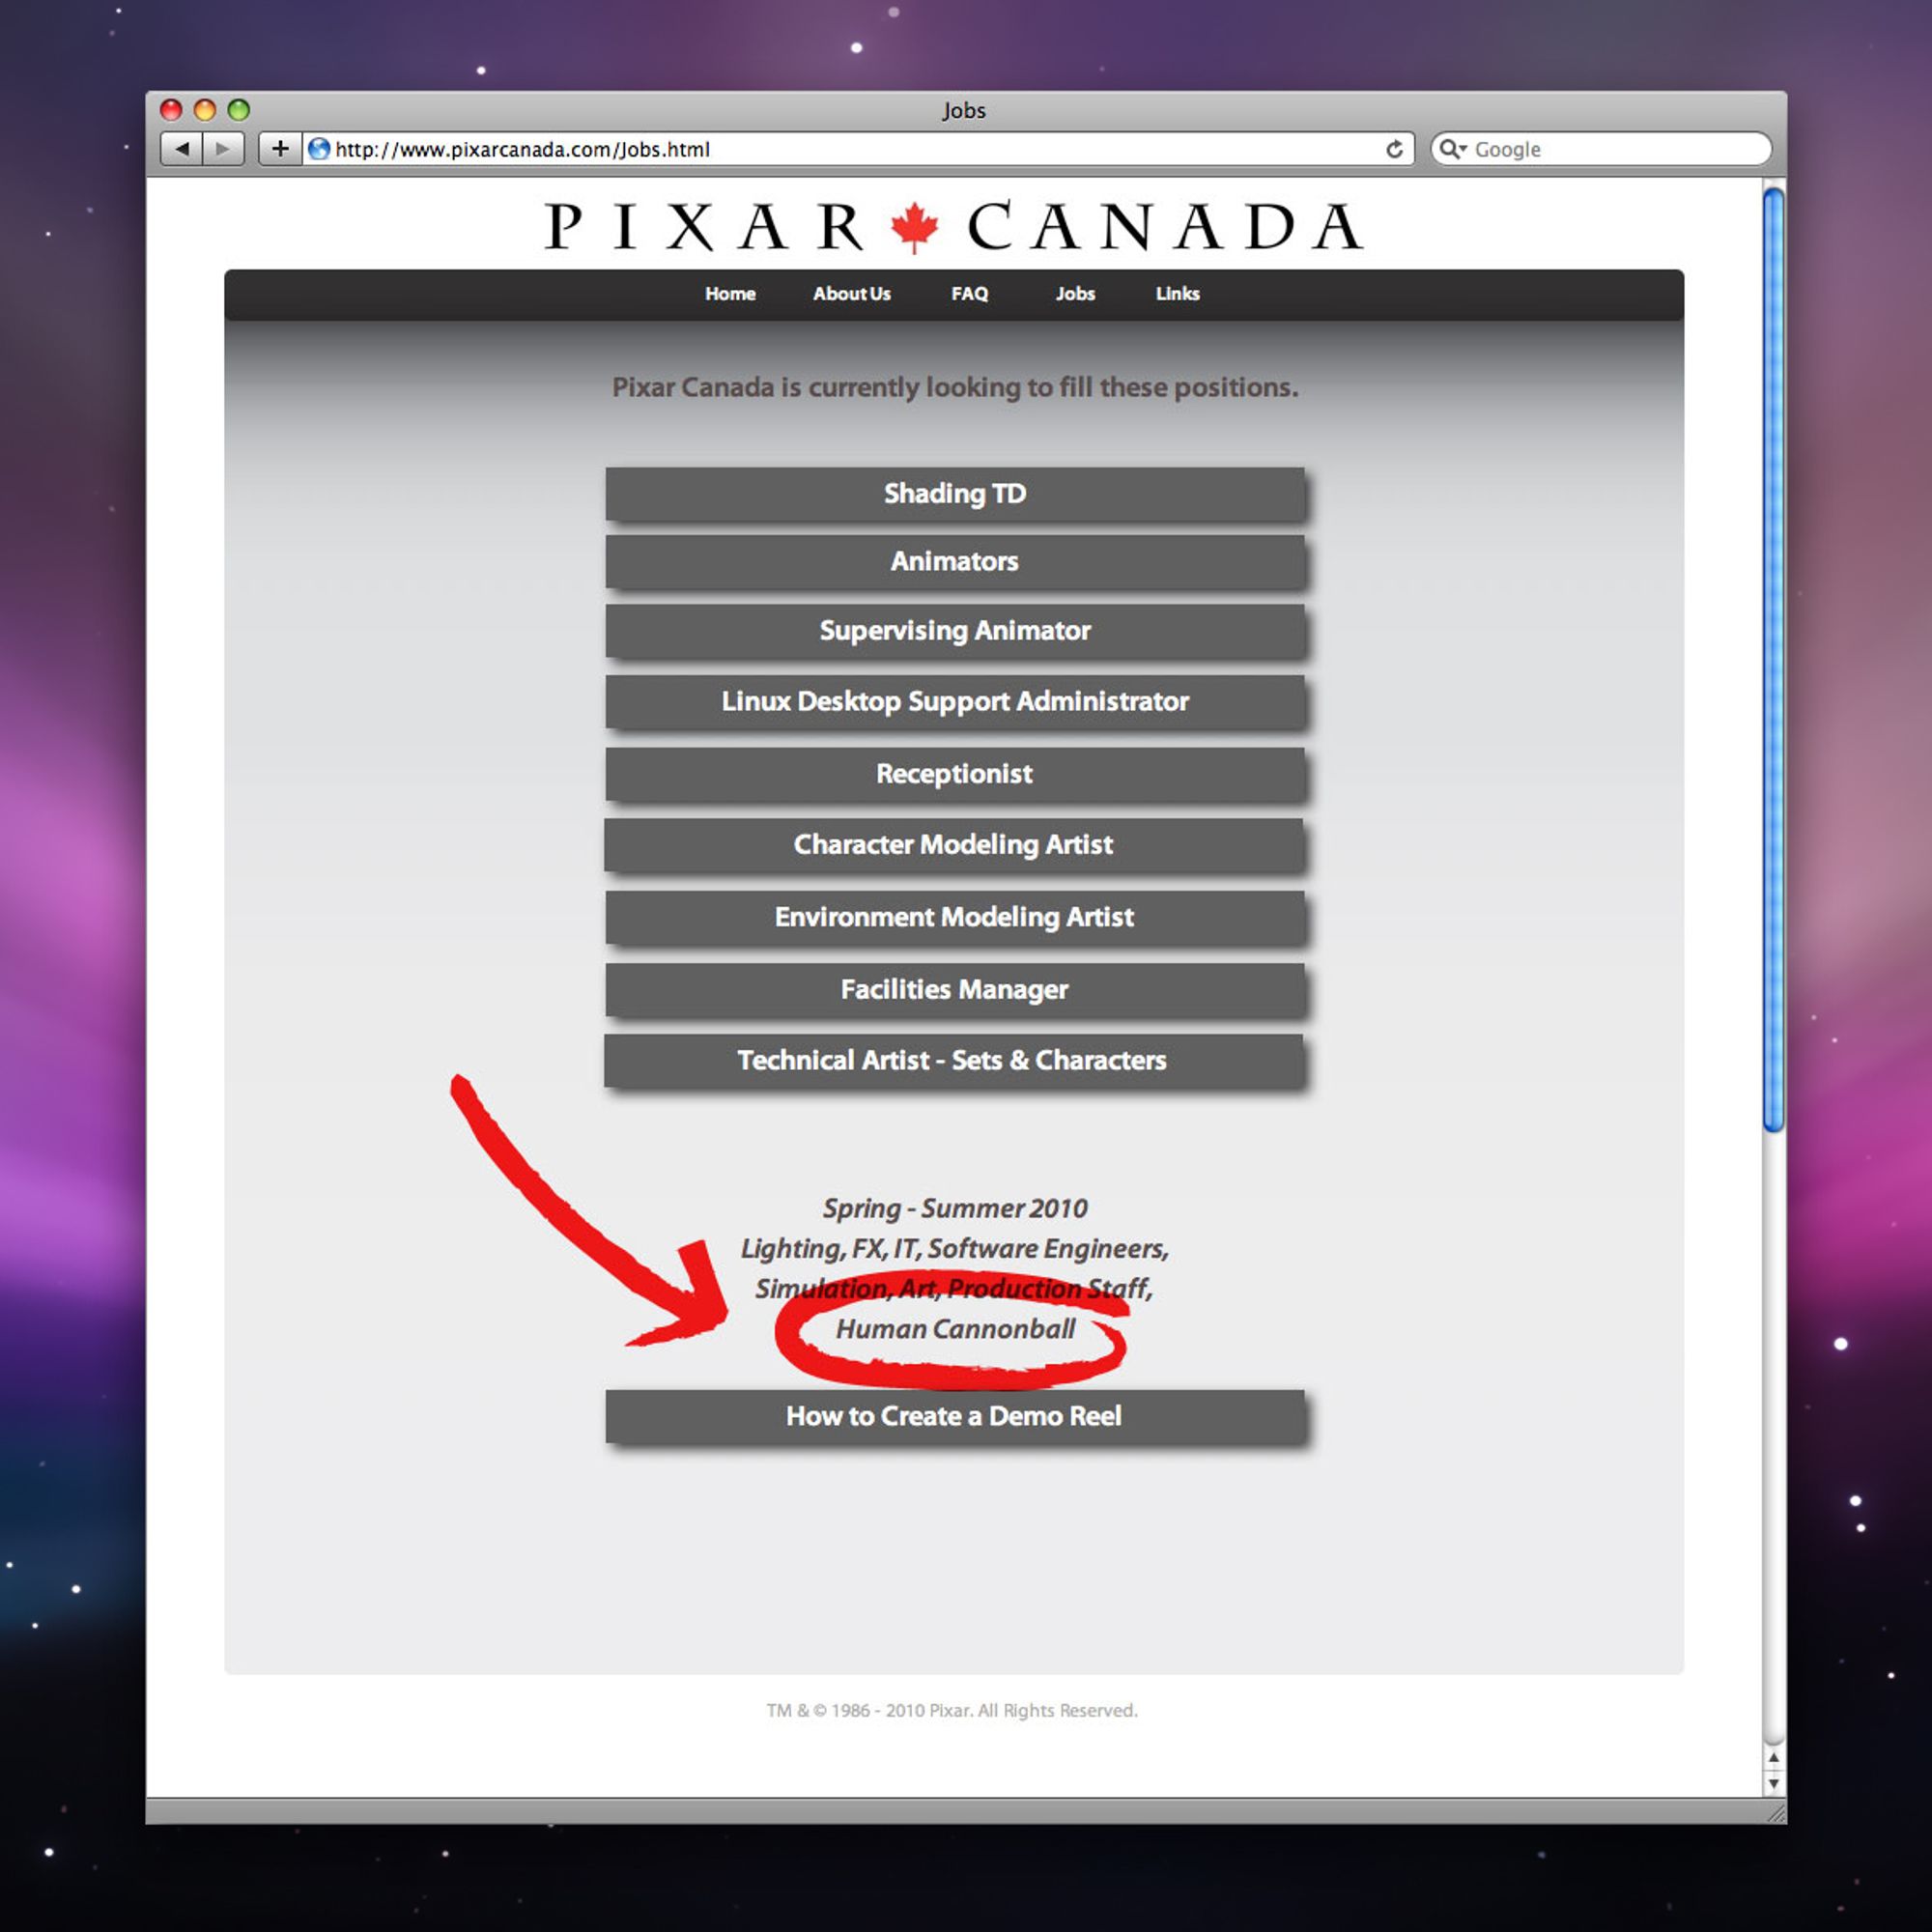 Screenshot of Pixar Canada's hiring page with “Human Cannonball” circled